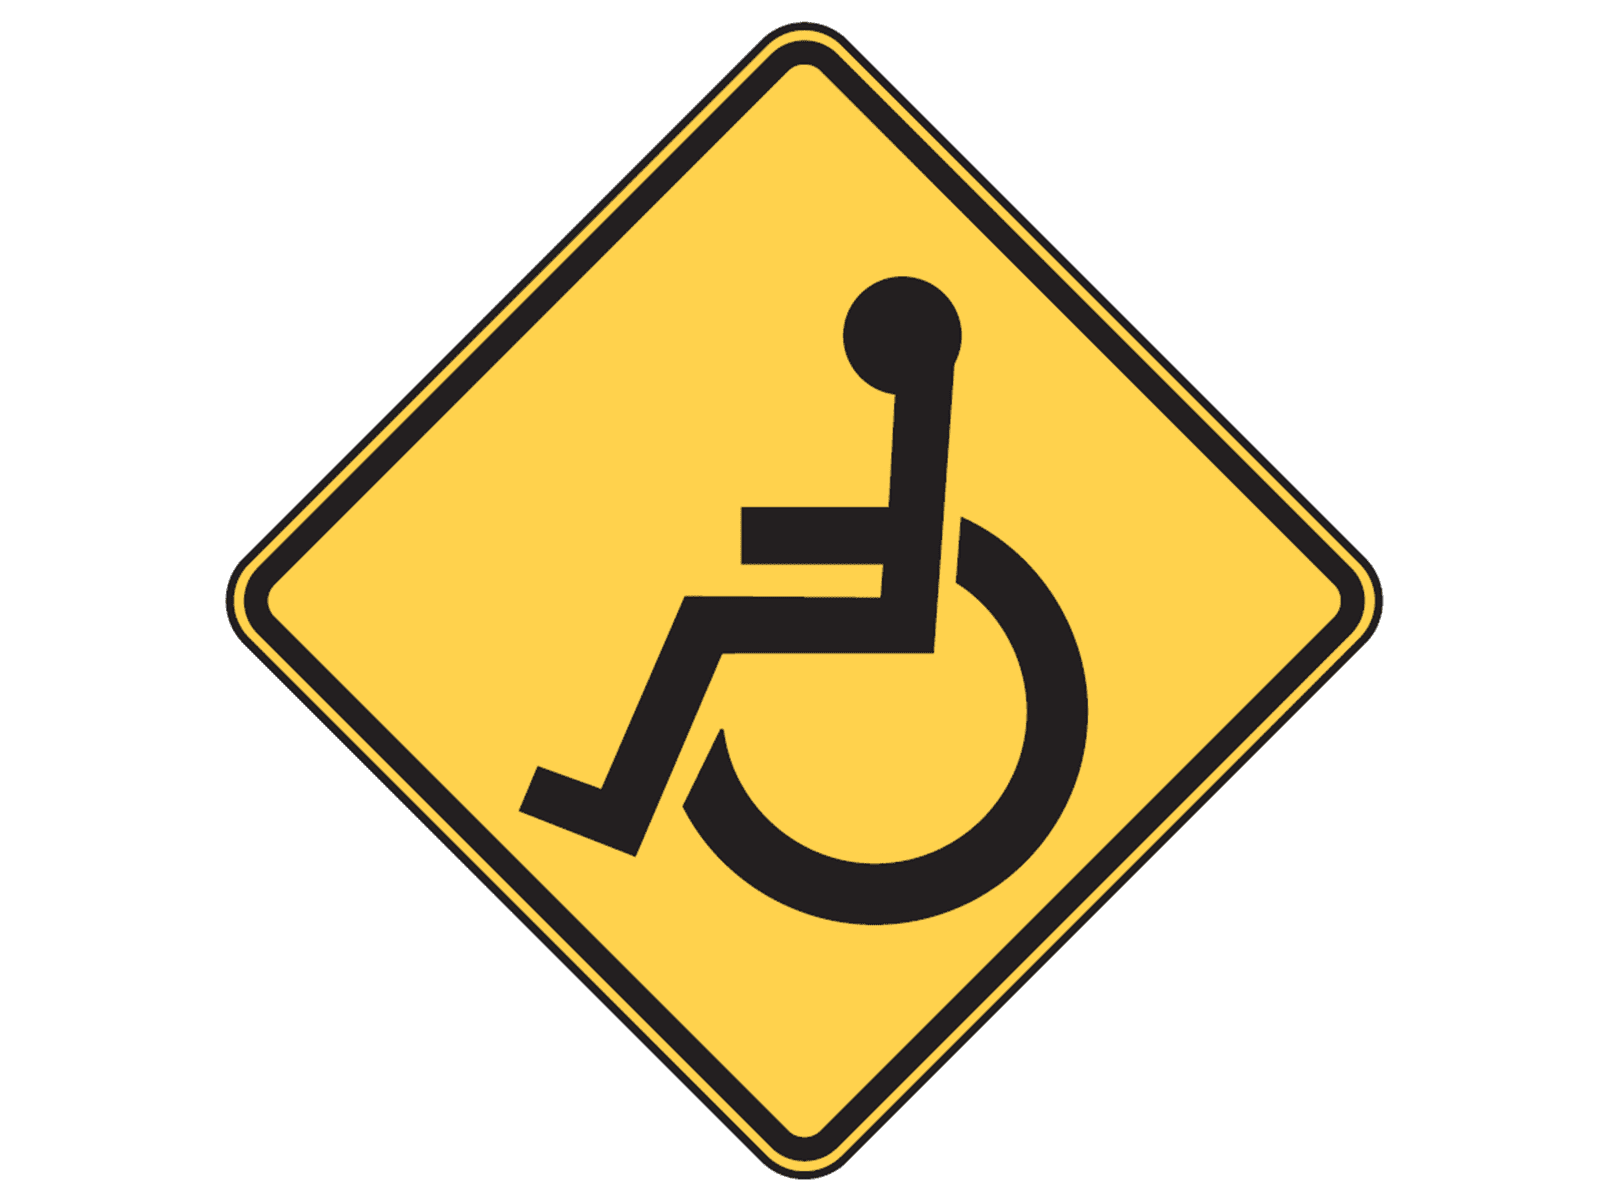 Wheelchair W11-9 - W11: Vehicles